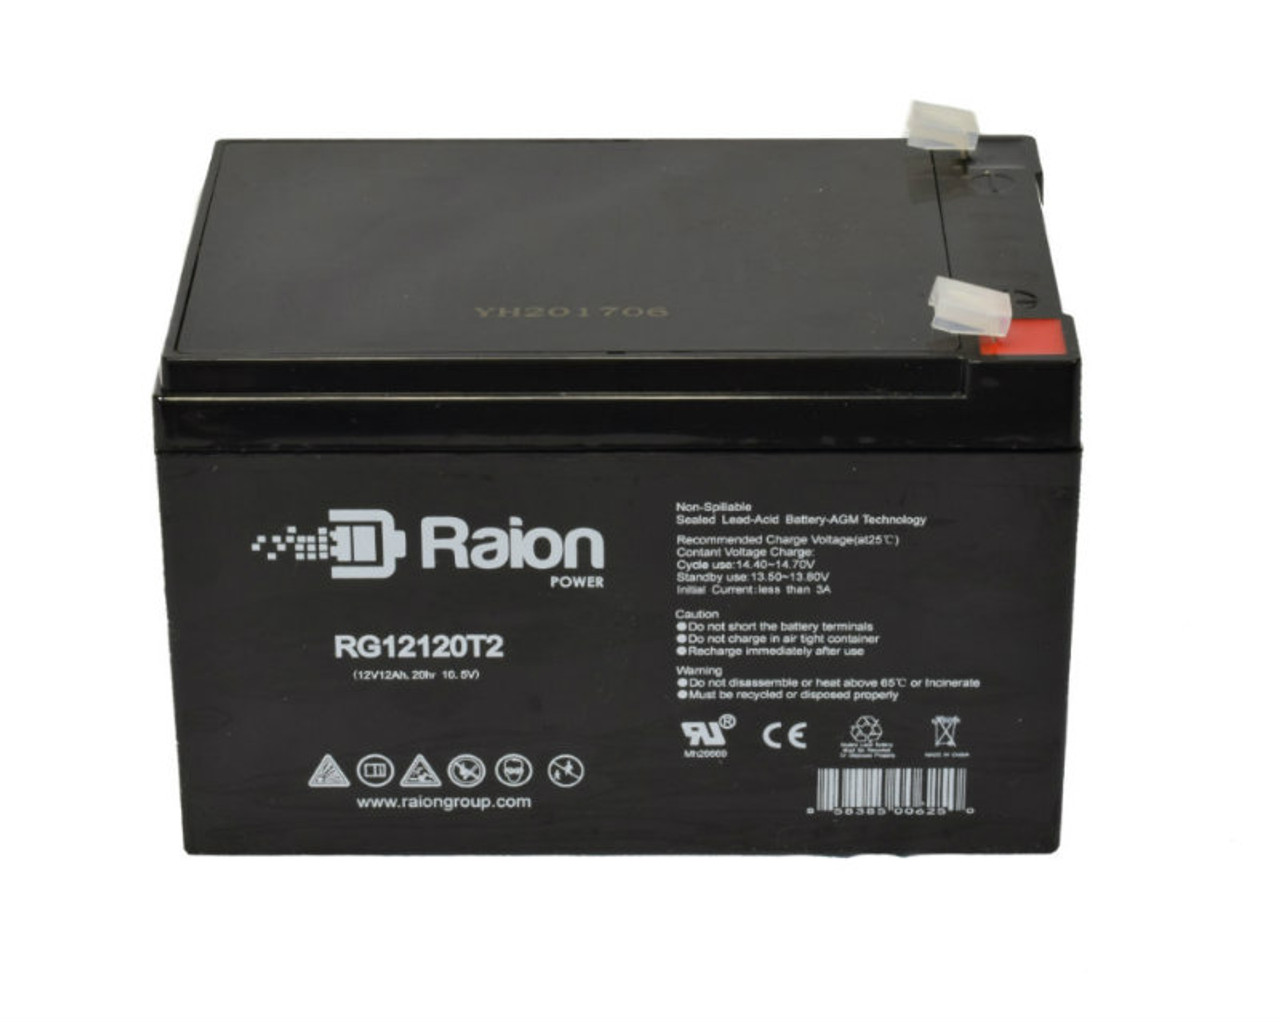 Raion Power RG12120T2 SLA Battery for ShoPride Mobilityr Xtralite Jiffy (UL7WR, UL7WRII) Wheelchairs